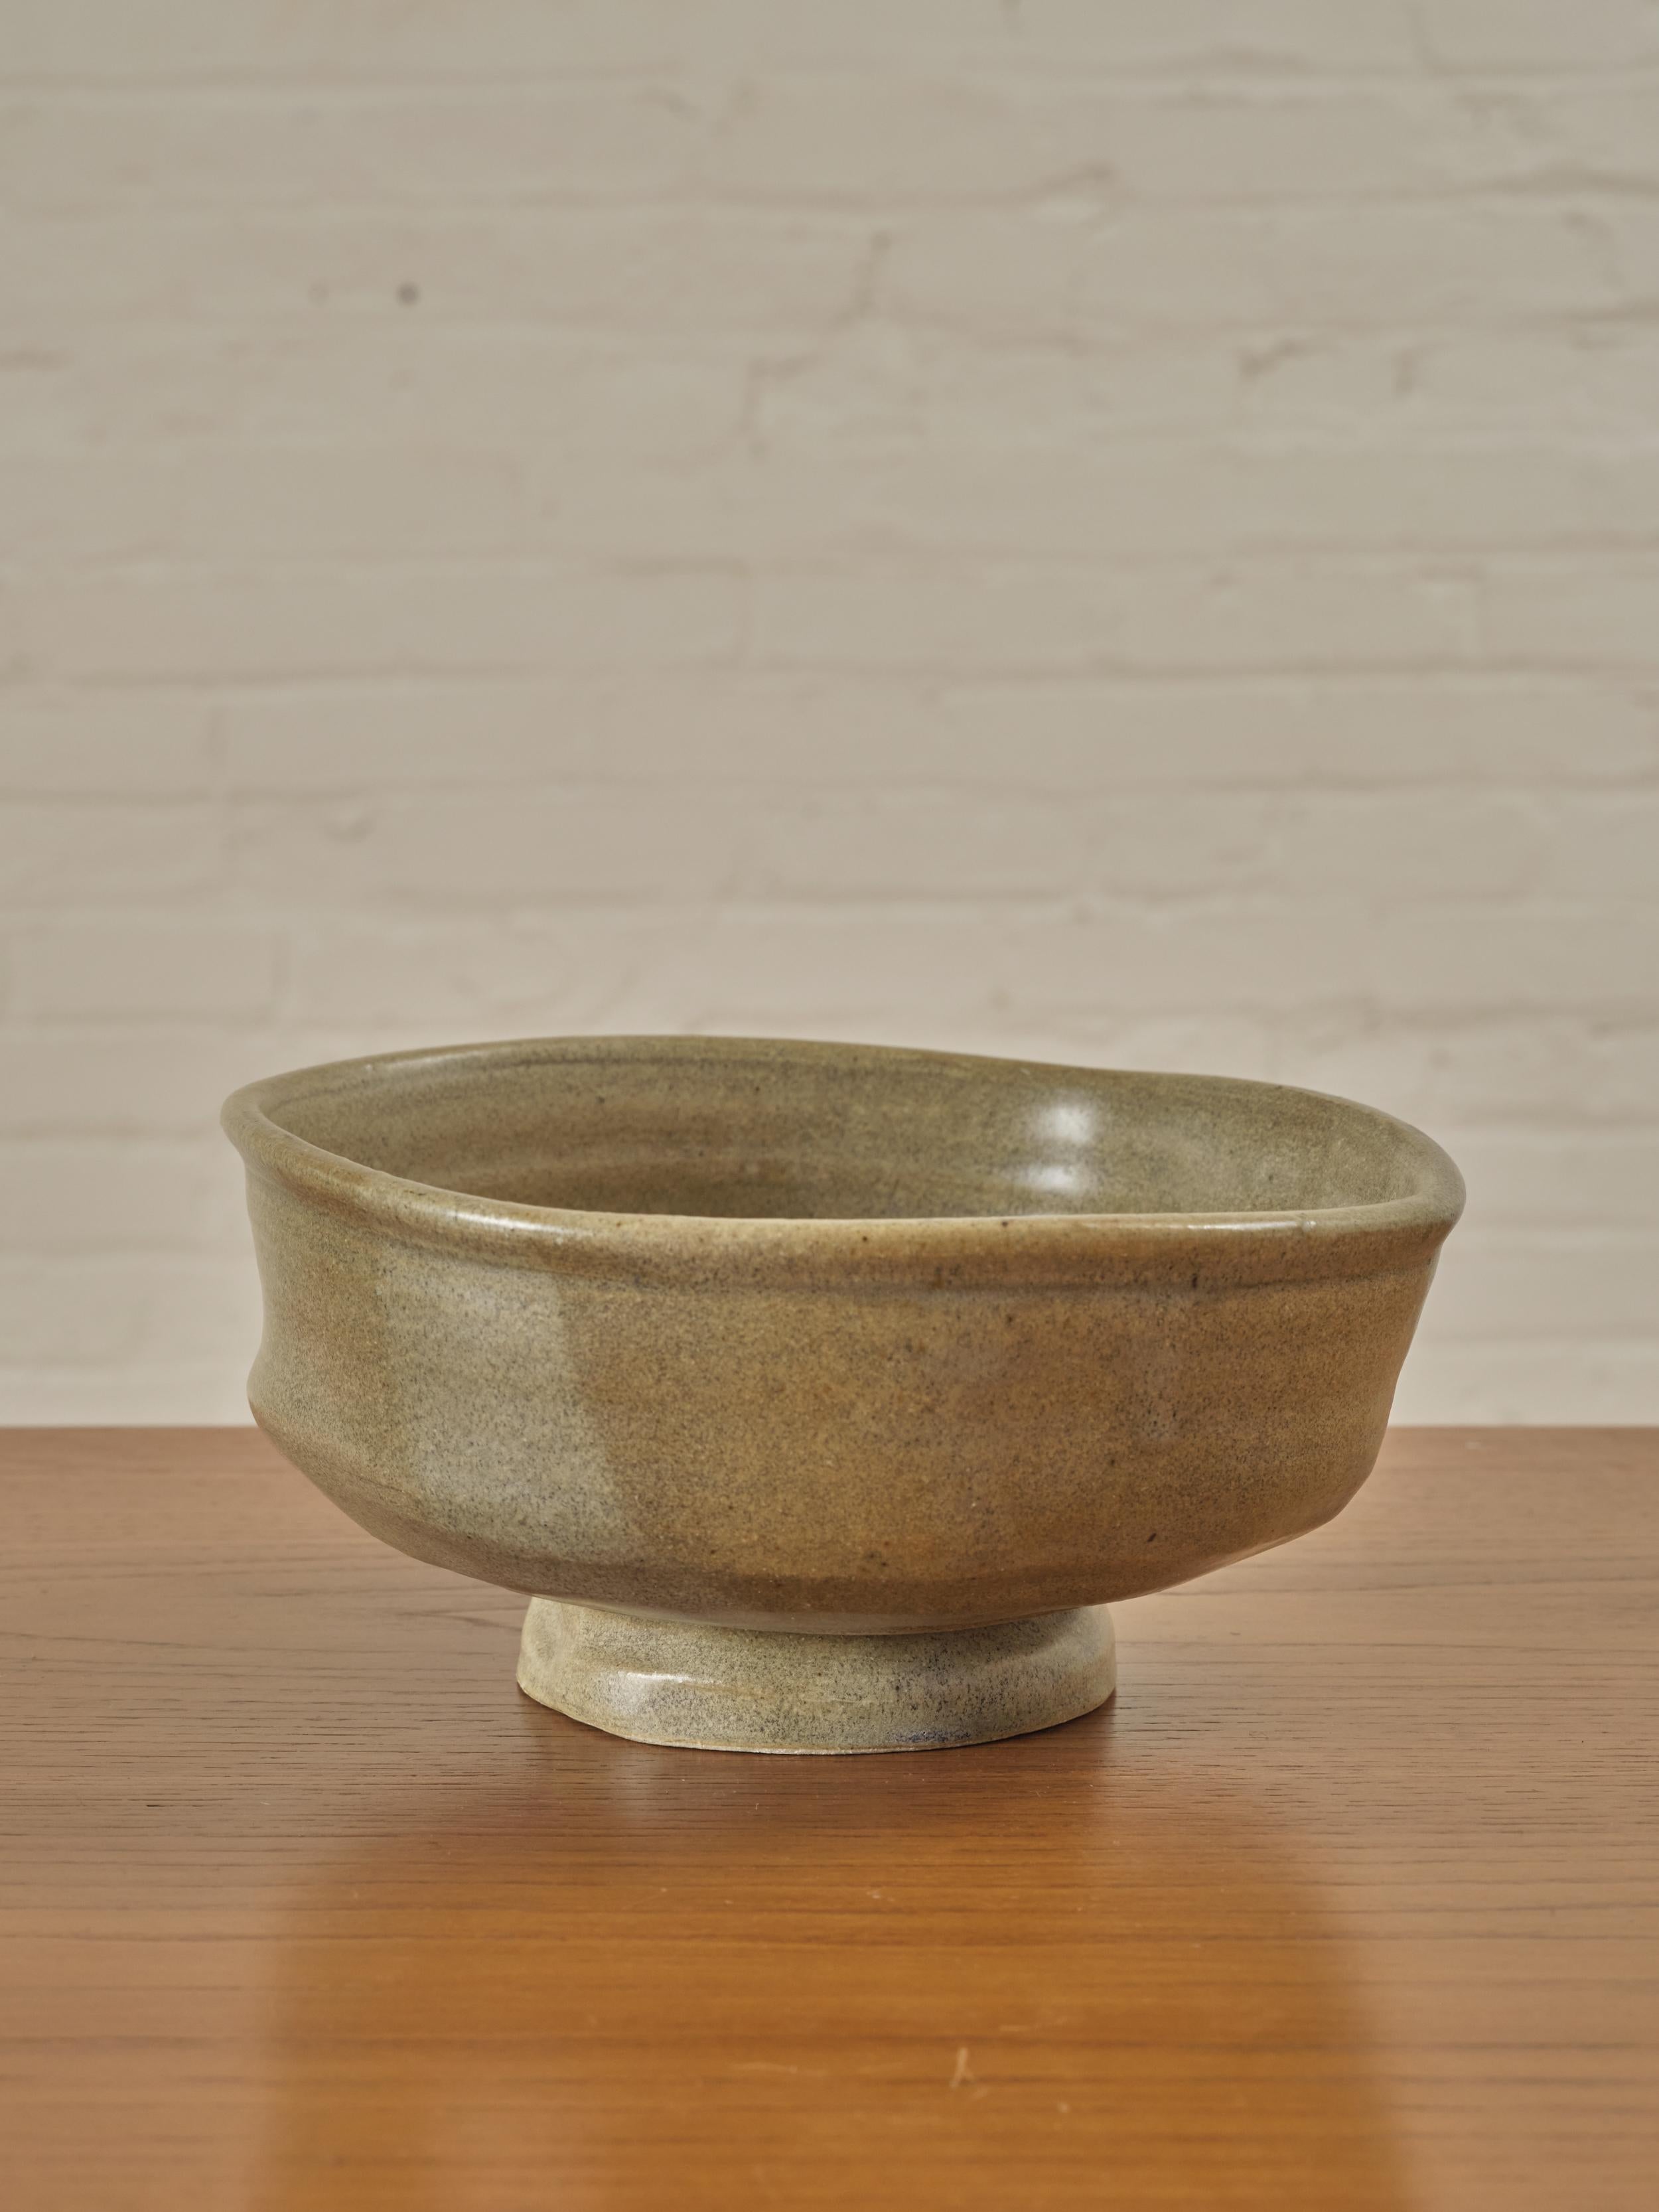 Ceramic Japanese Ikebana Bowl with an irregular shape. 

